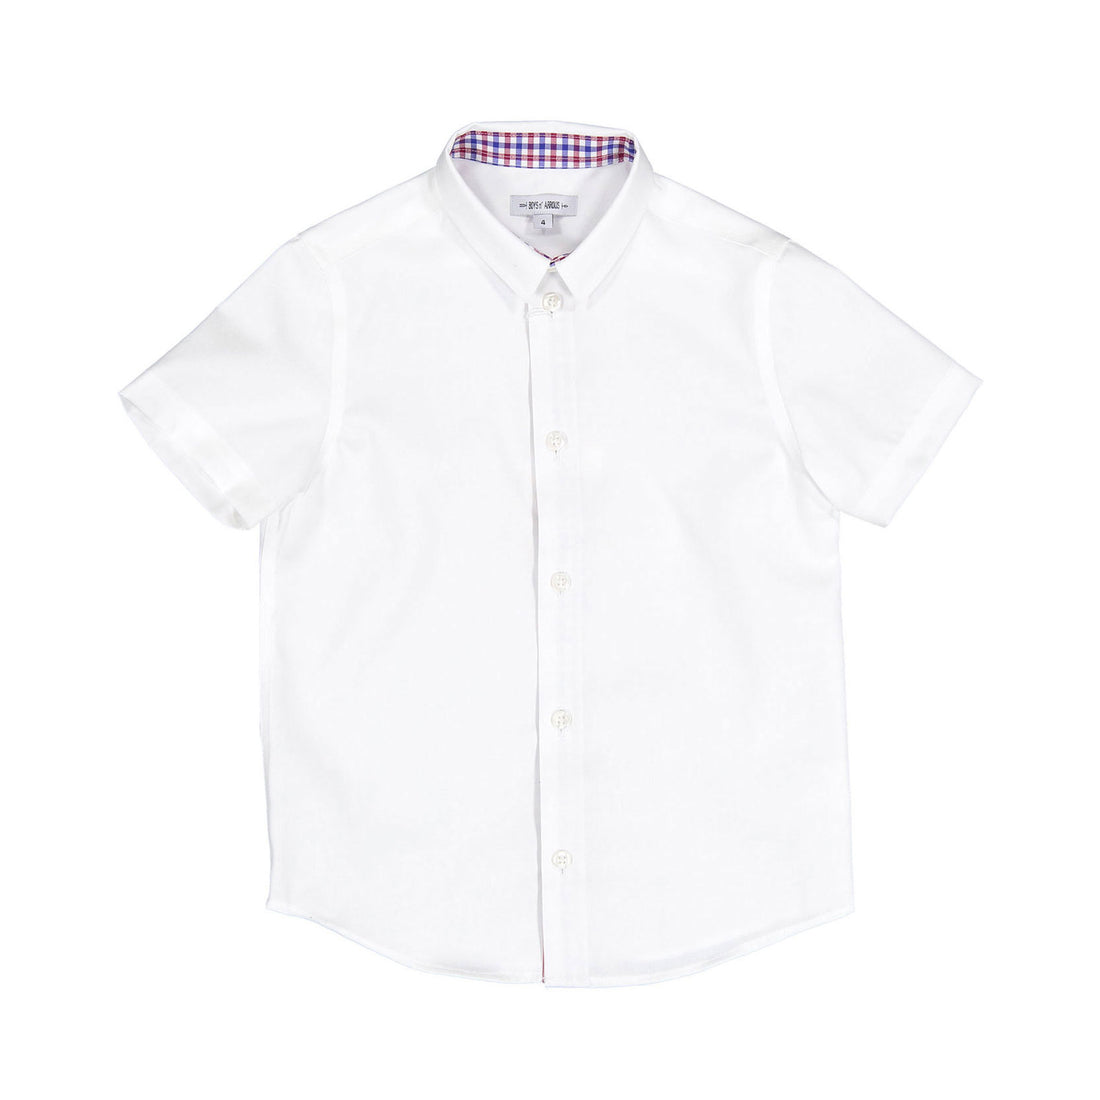 Boys and Arrows White/Burgundy Checkered Shirt